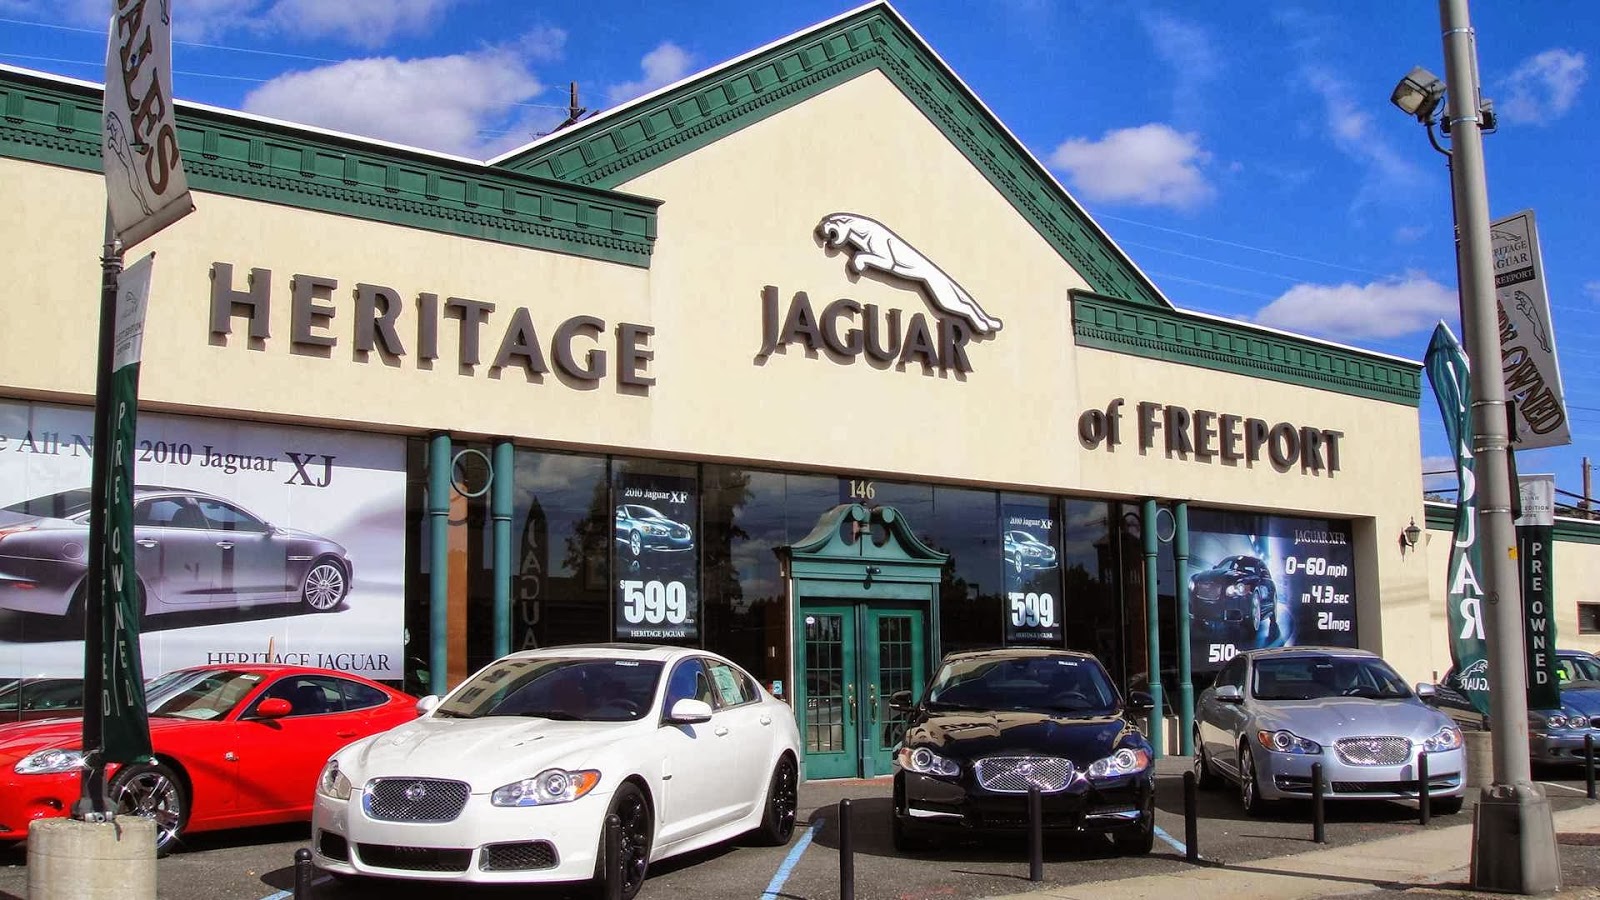 Photo of Jaguar Freeport in Freeport City, New York, United States - 1 Picture of Point of interest, Establishment, Car dealer, Store, Car repair